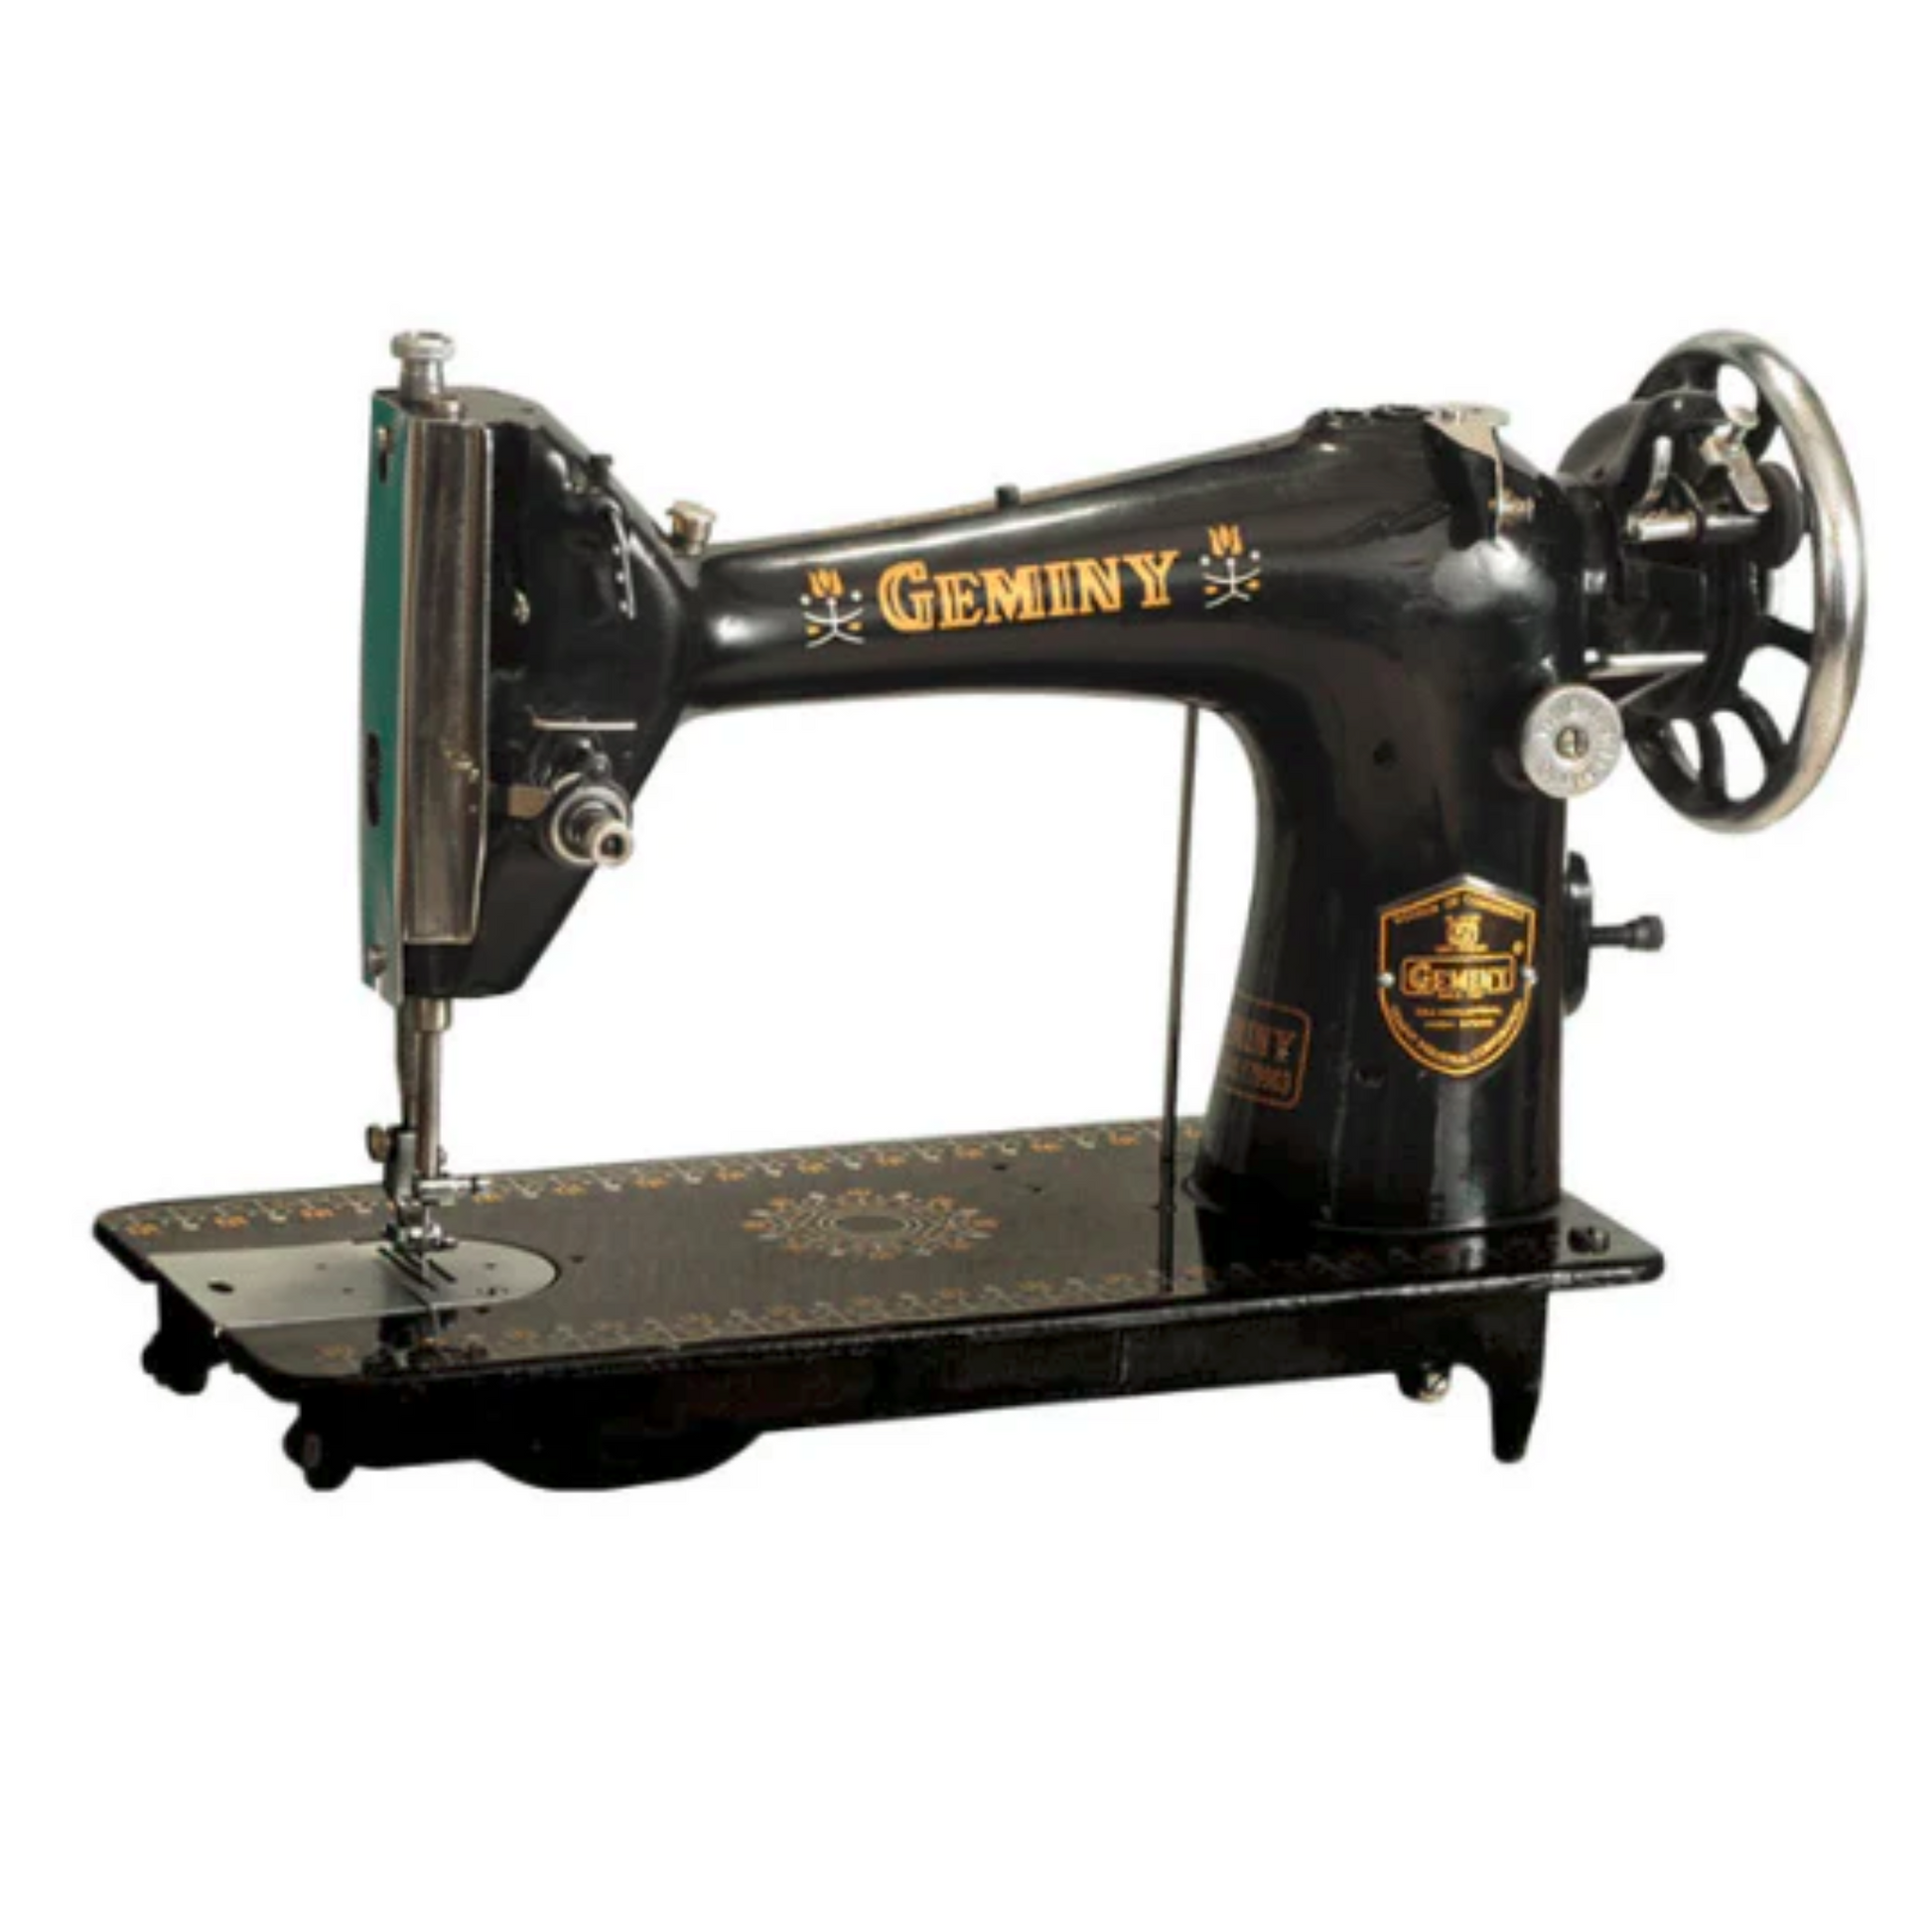 Geminy Ta-1 heavy duty -Vintage sewing machine - Black - Side view